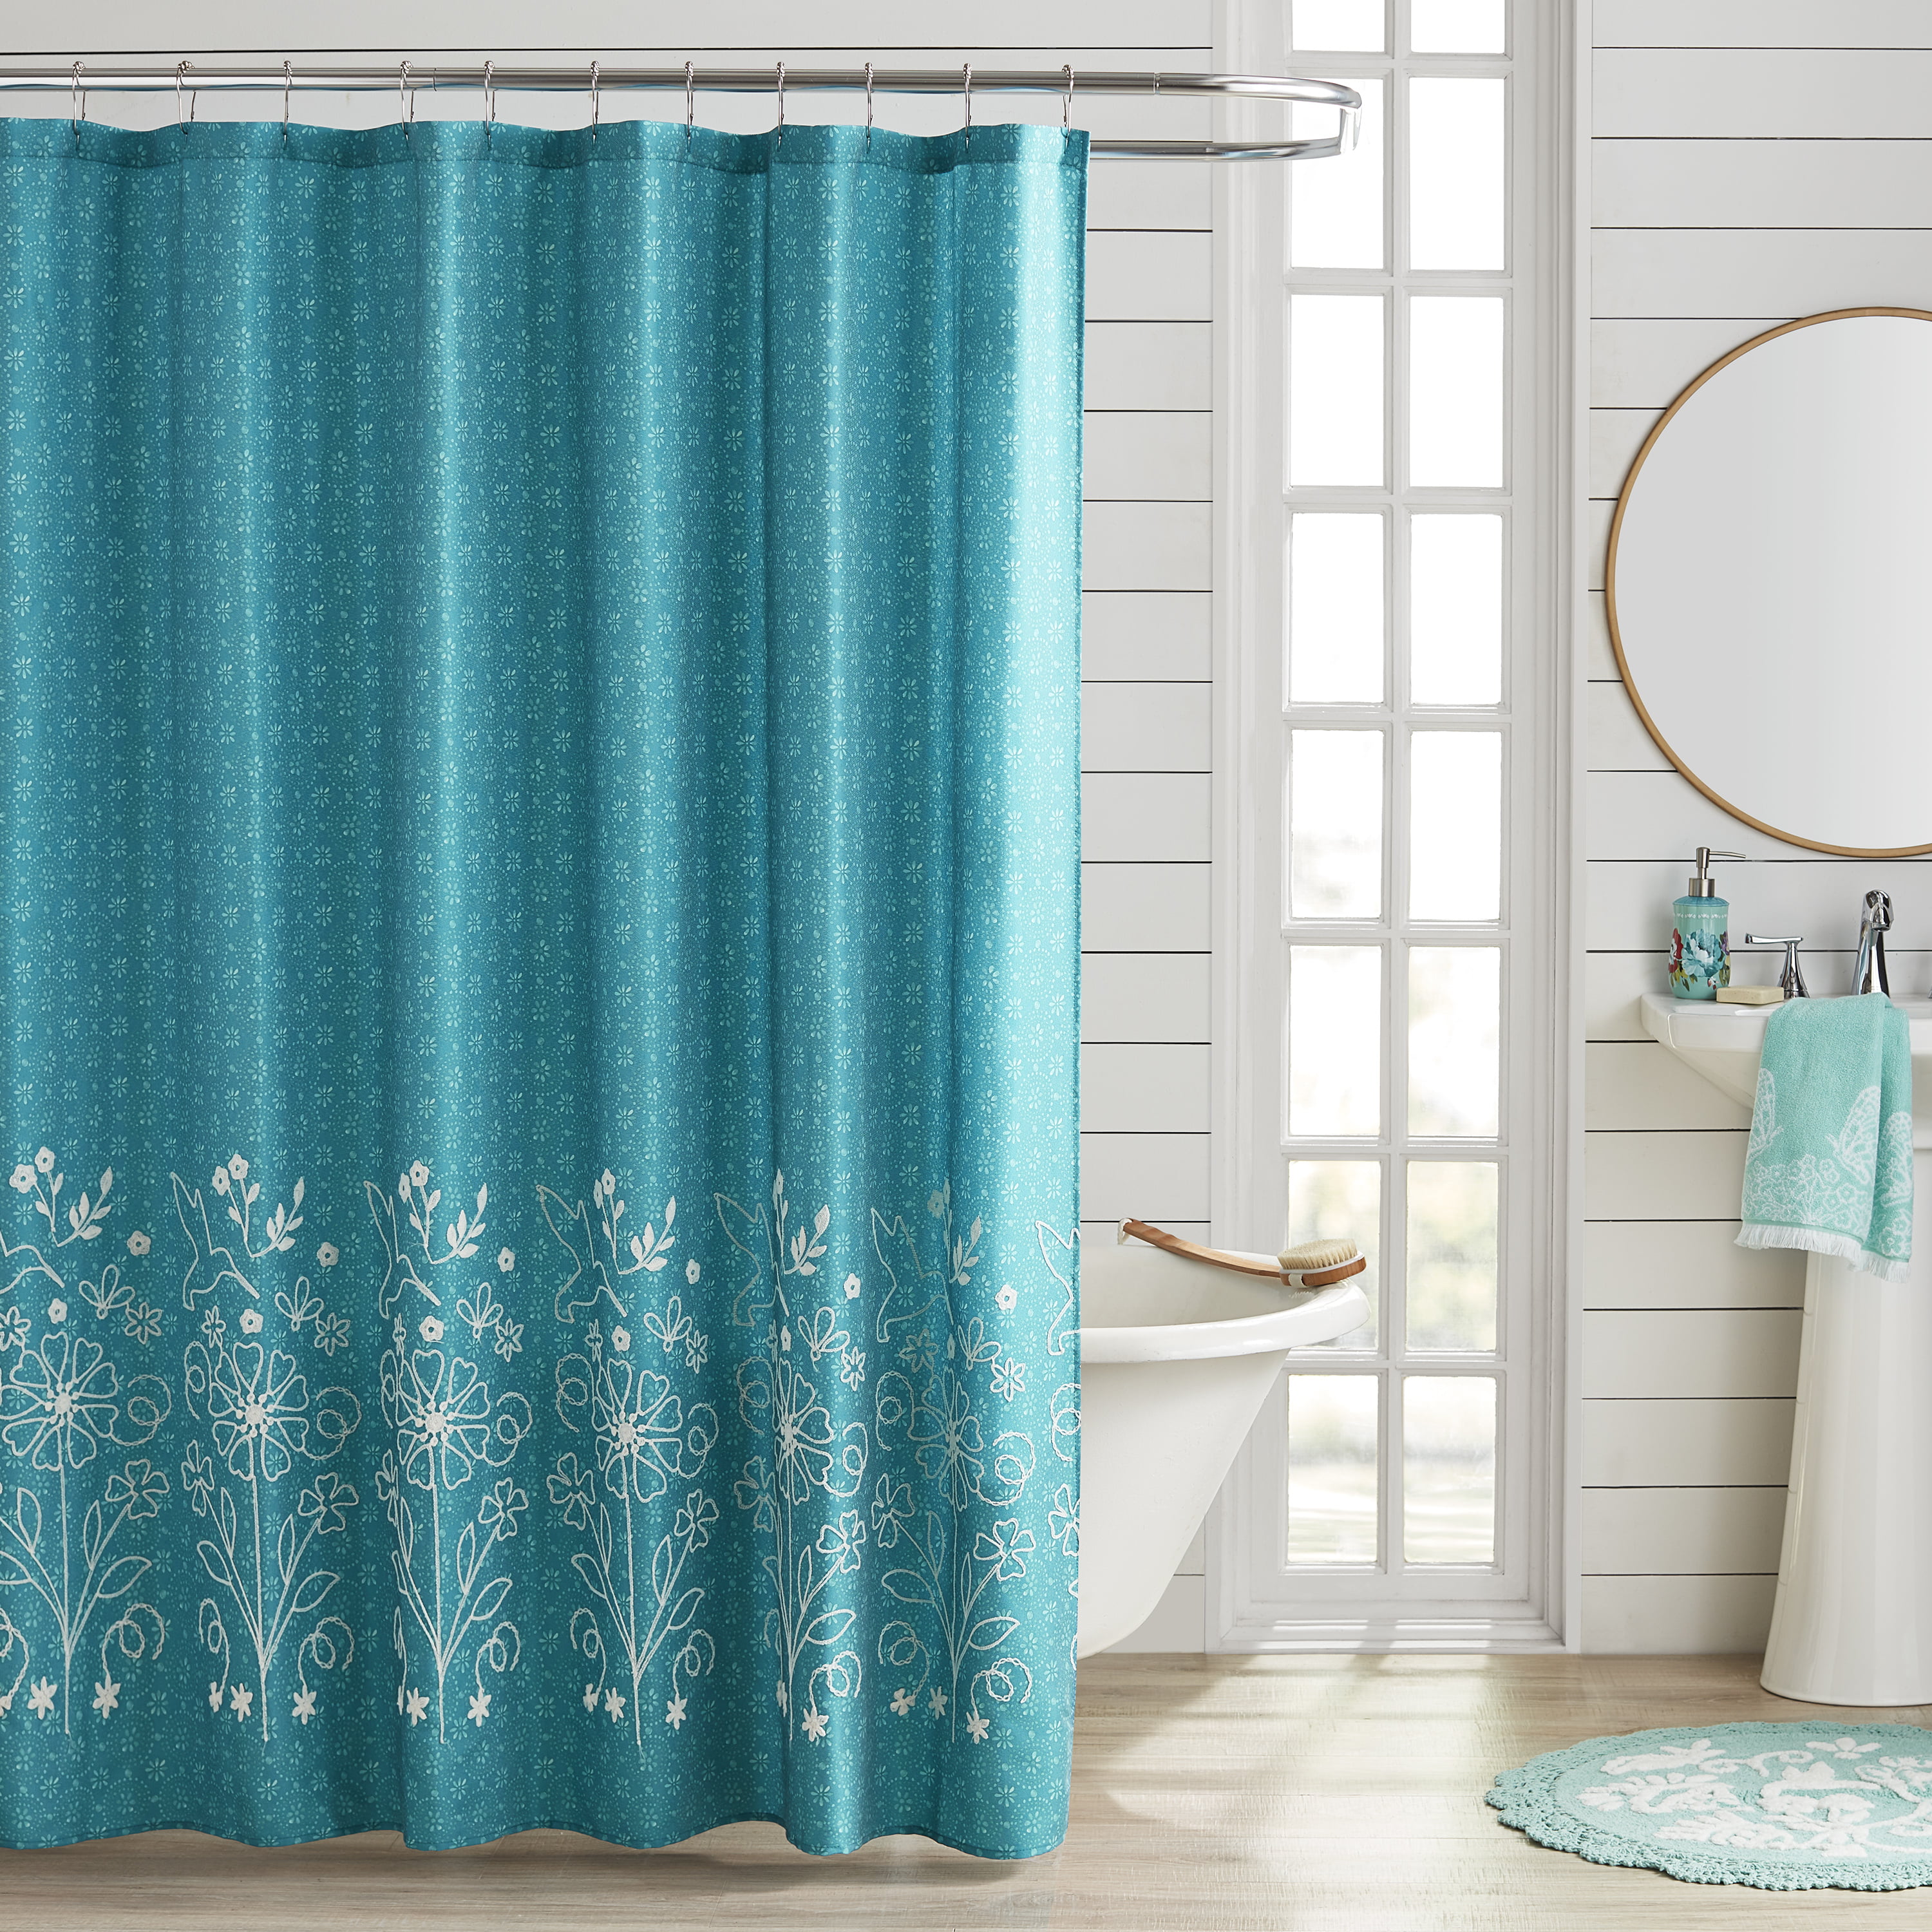 Fishing Root & Lure Shower Curtain Bathroom Waterproof Fabric Bath Accessories 